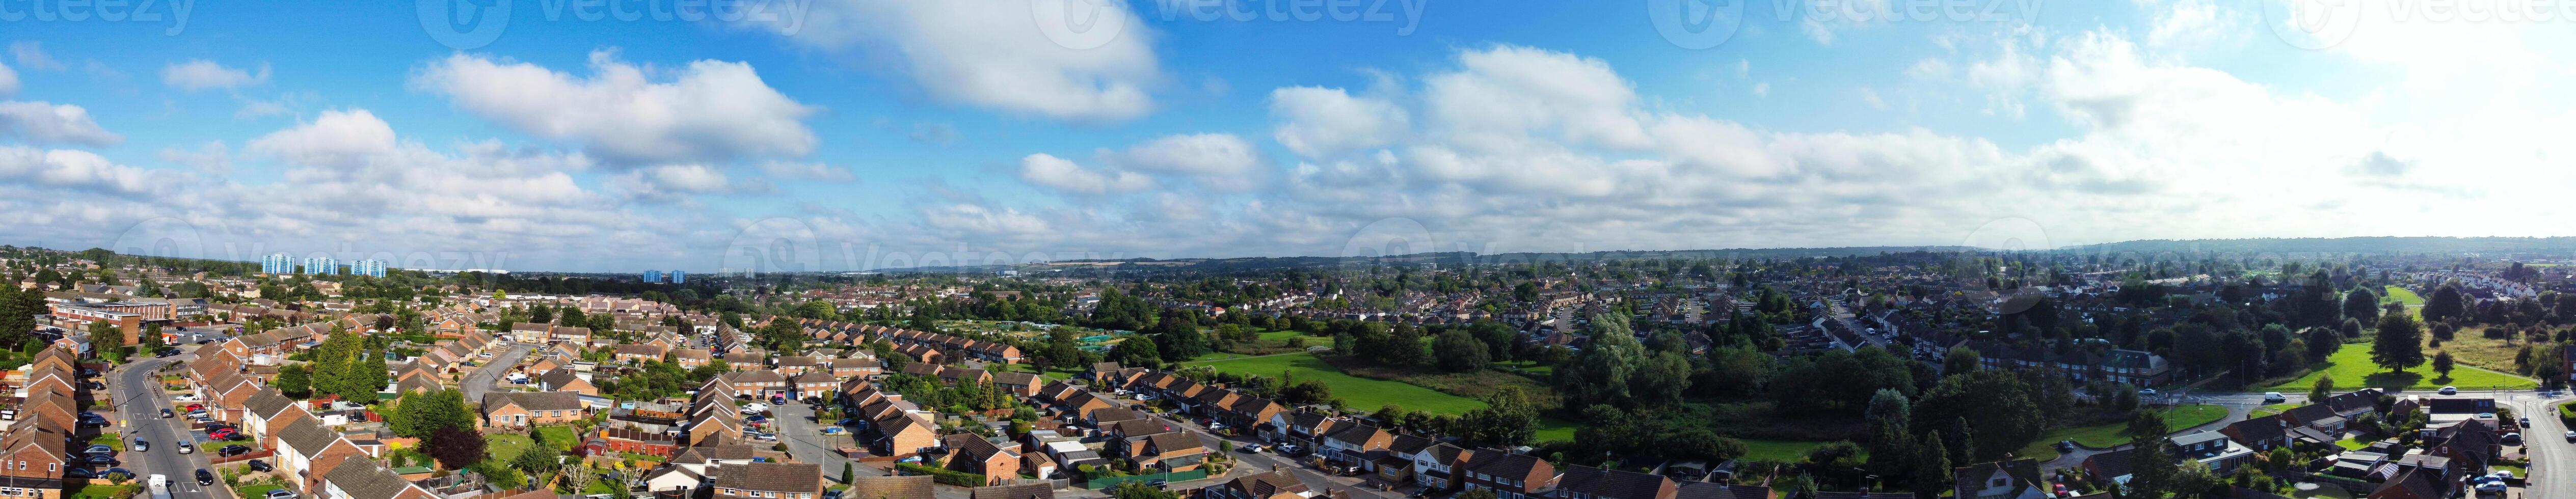 antenne panoramisch visie van oosten- luton stad van Engeland uk. augustus 17e, 2023 foto